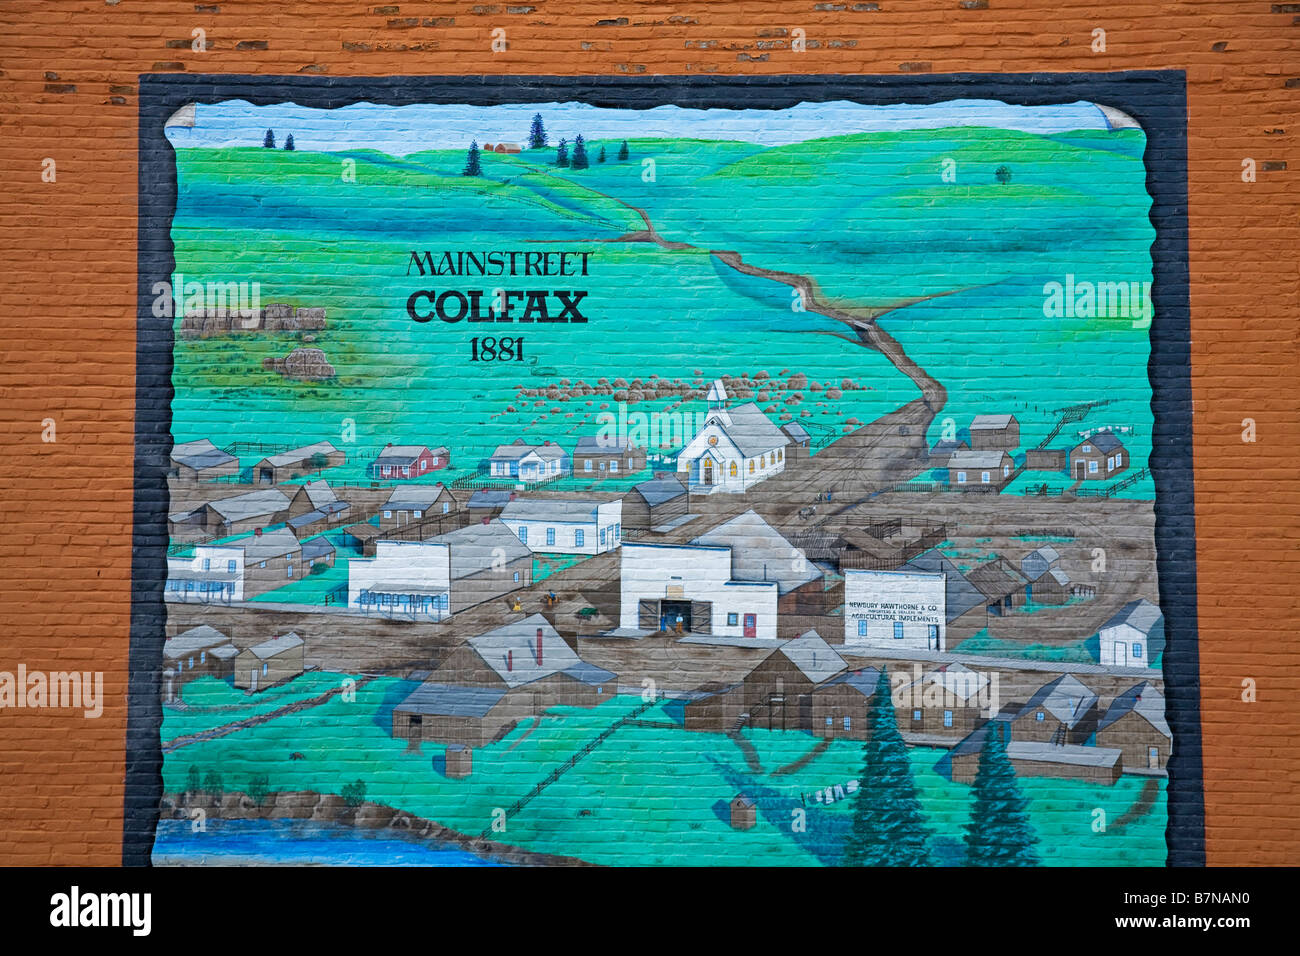 History Mural by Colfax Arts Council Colfax City Palouse Region Spokane Washington State USA Stock Photo